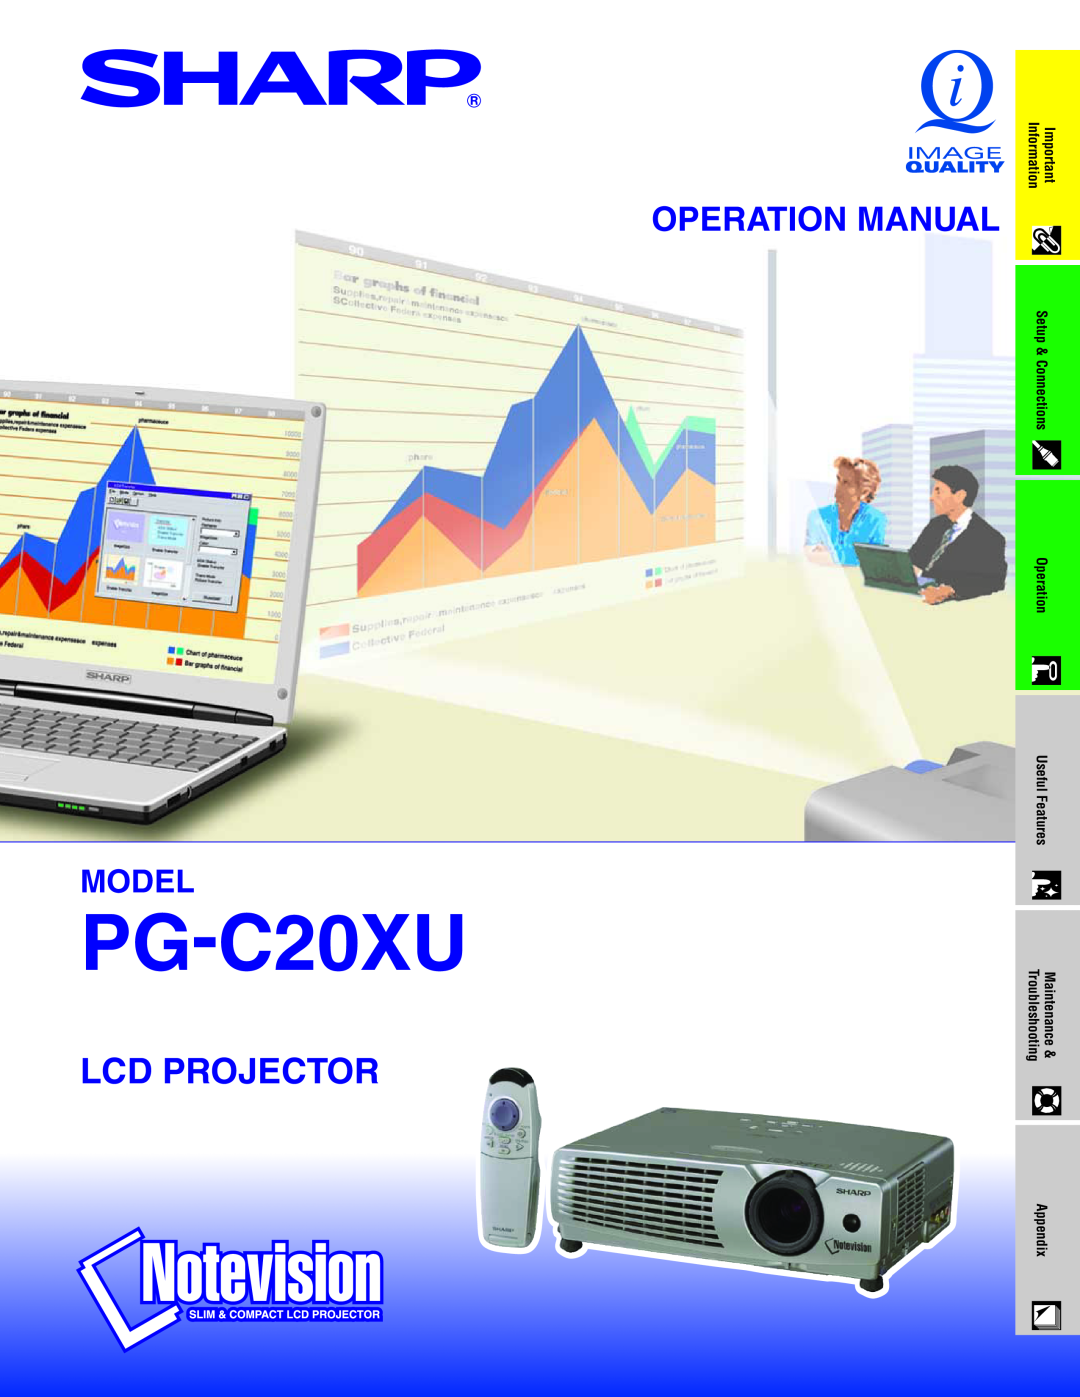 Sharp PG-C20XU operation manual Lcd Projector, Operation Manual, Model, Setup, Information, Troubleshooting, Maintenance 